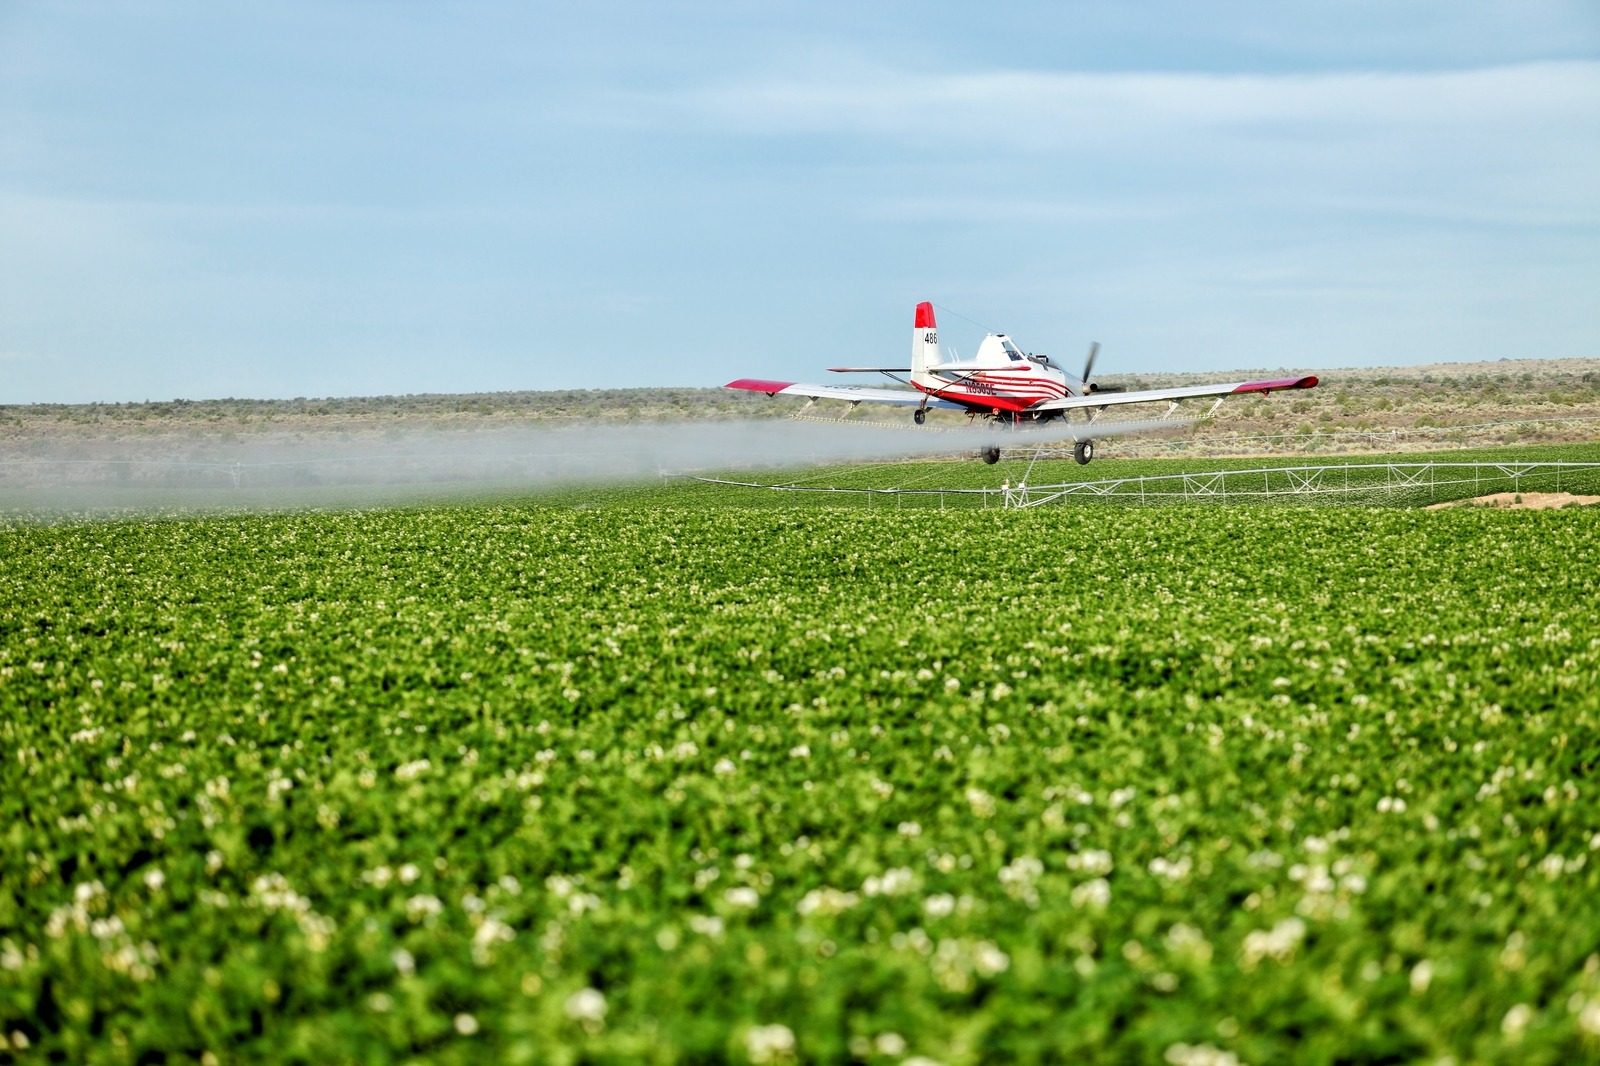 A low-flying crop duster sprays green farmland in Idaho Falls, Idaho on August 16, 2012. Photo by B. Brown/Shutterstock